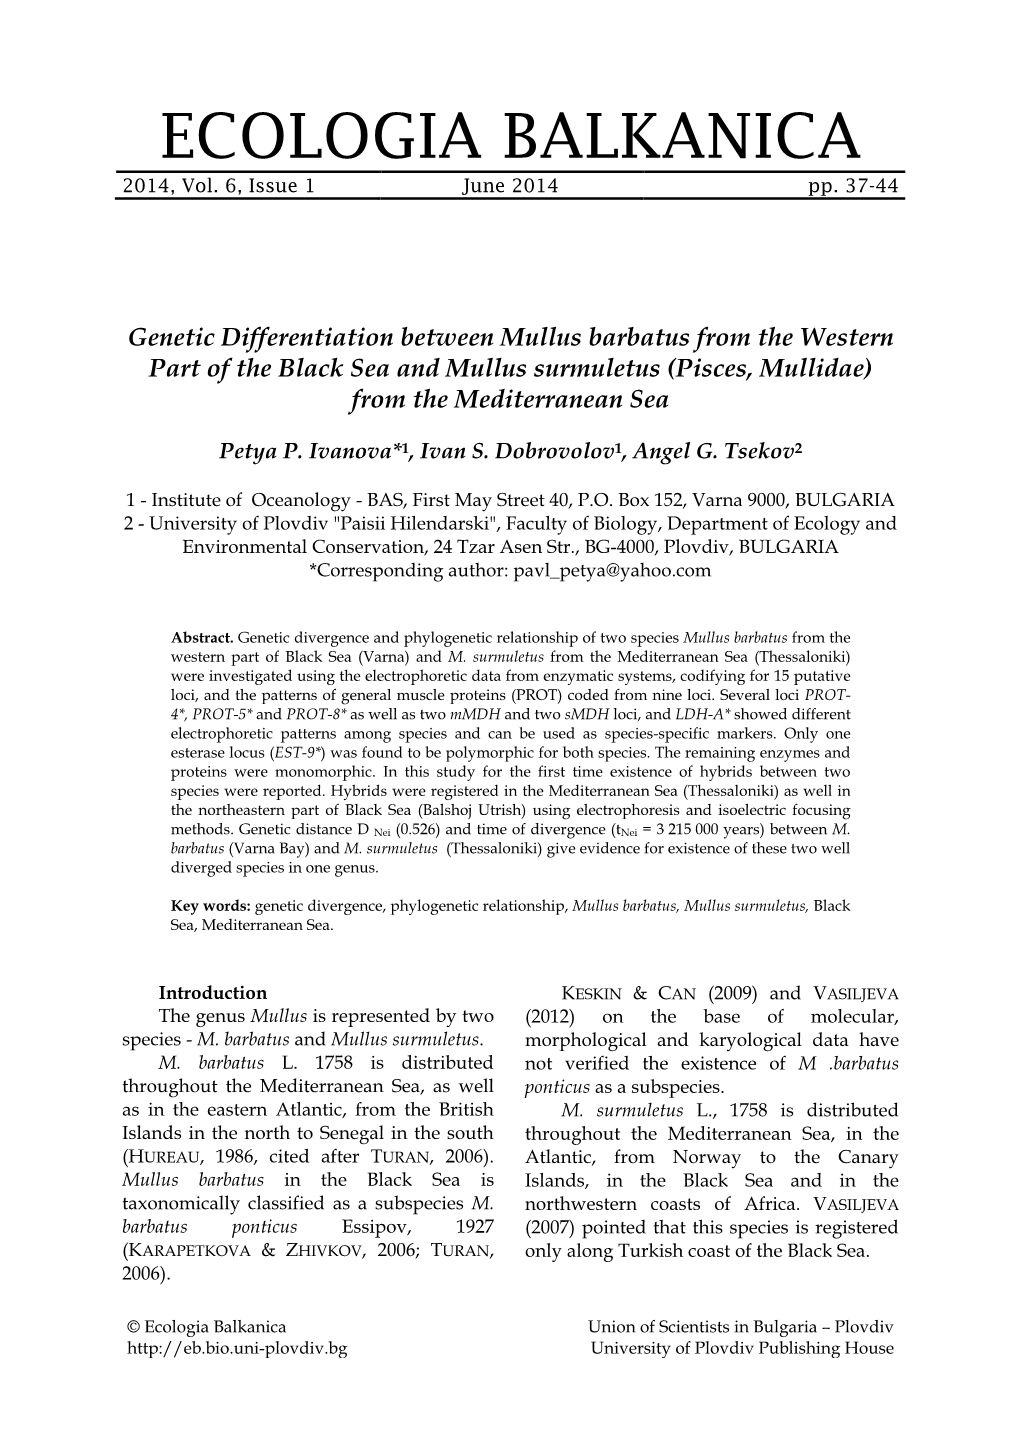 Genetic Differentiation Between Mullus Barbatus from the Western Part of the Black Sea and Mullus Surmuletus (Pisces, Mullidae) from the Mediterranean Sea